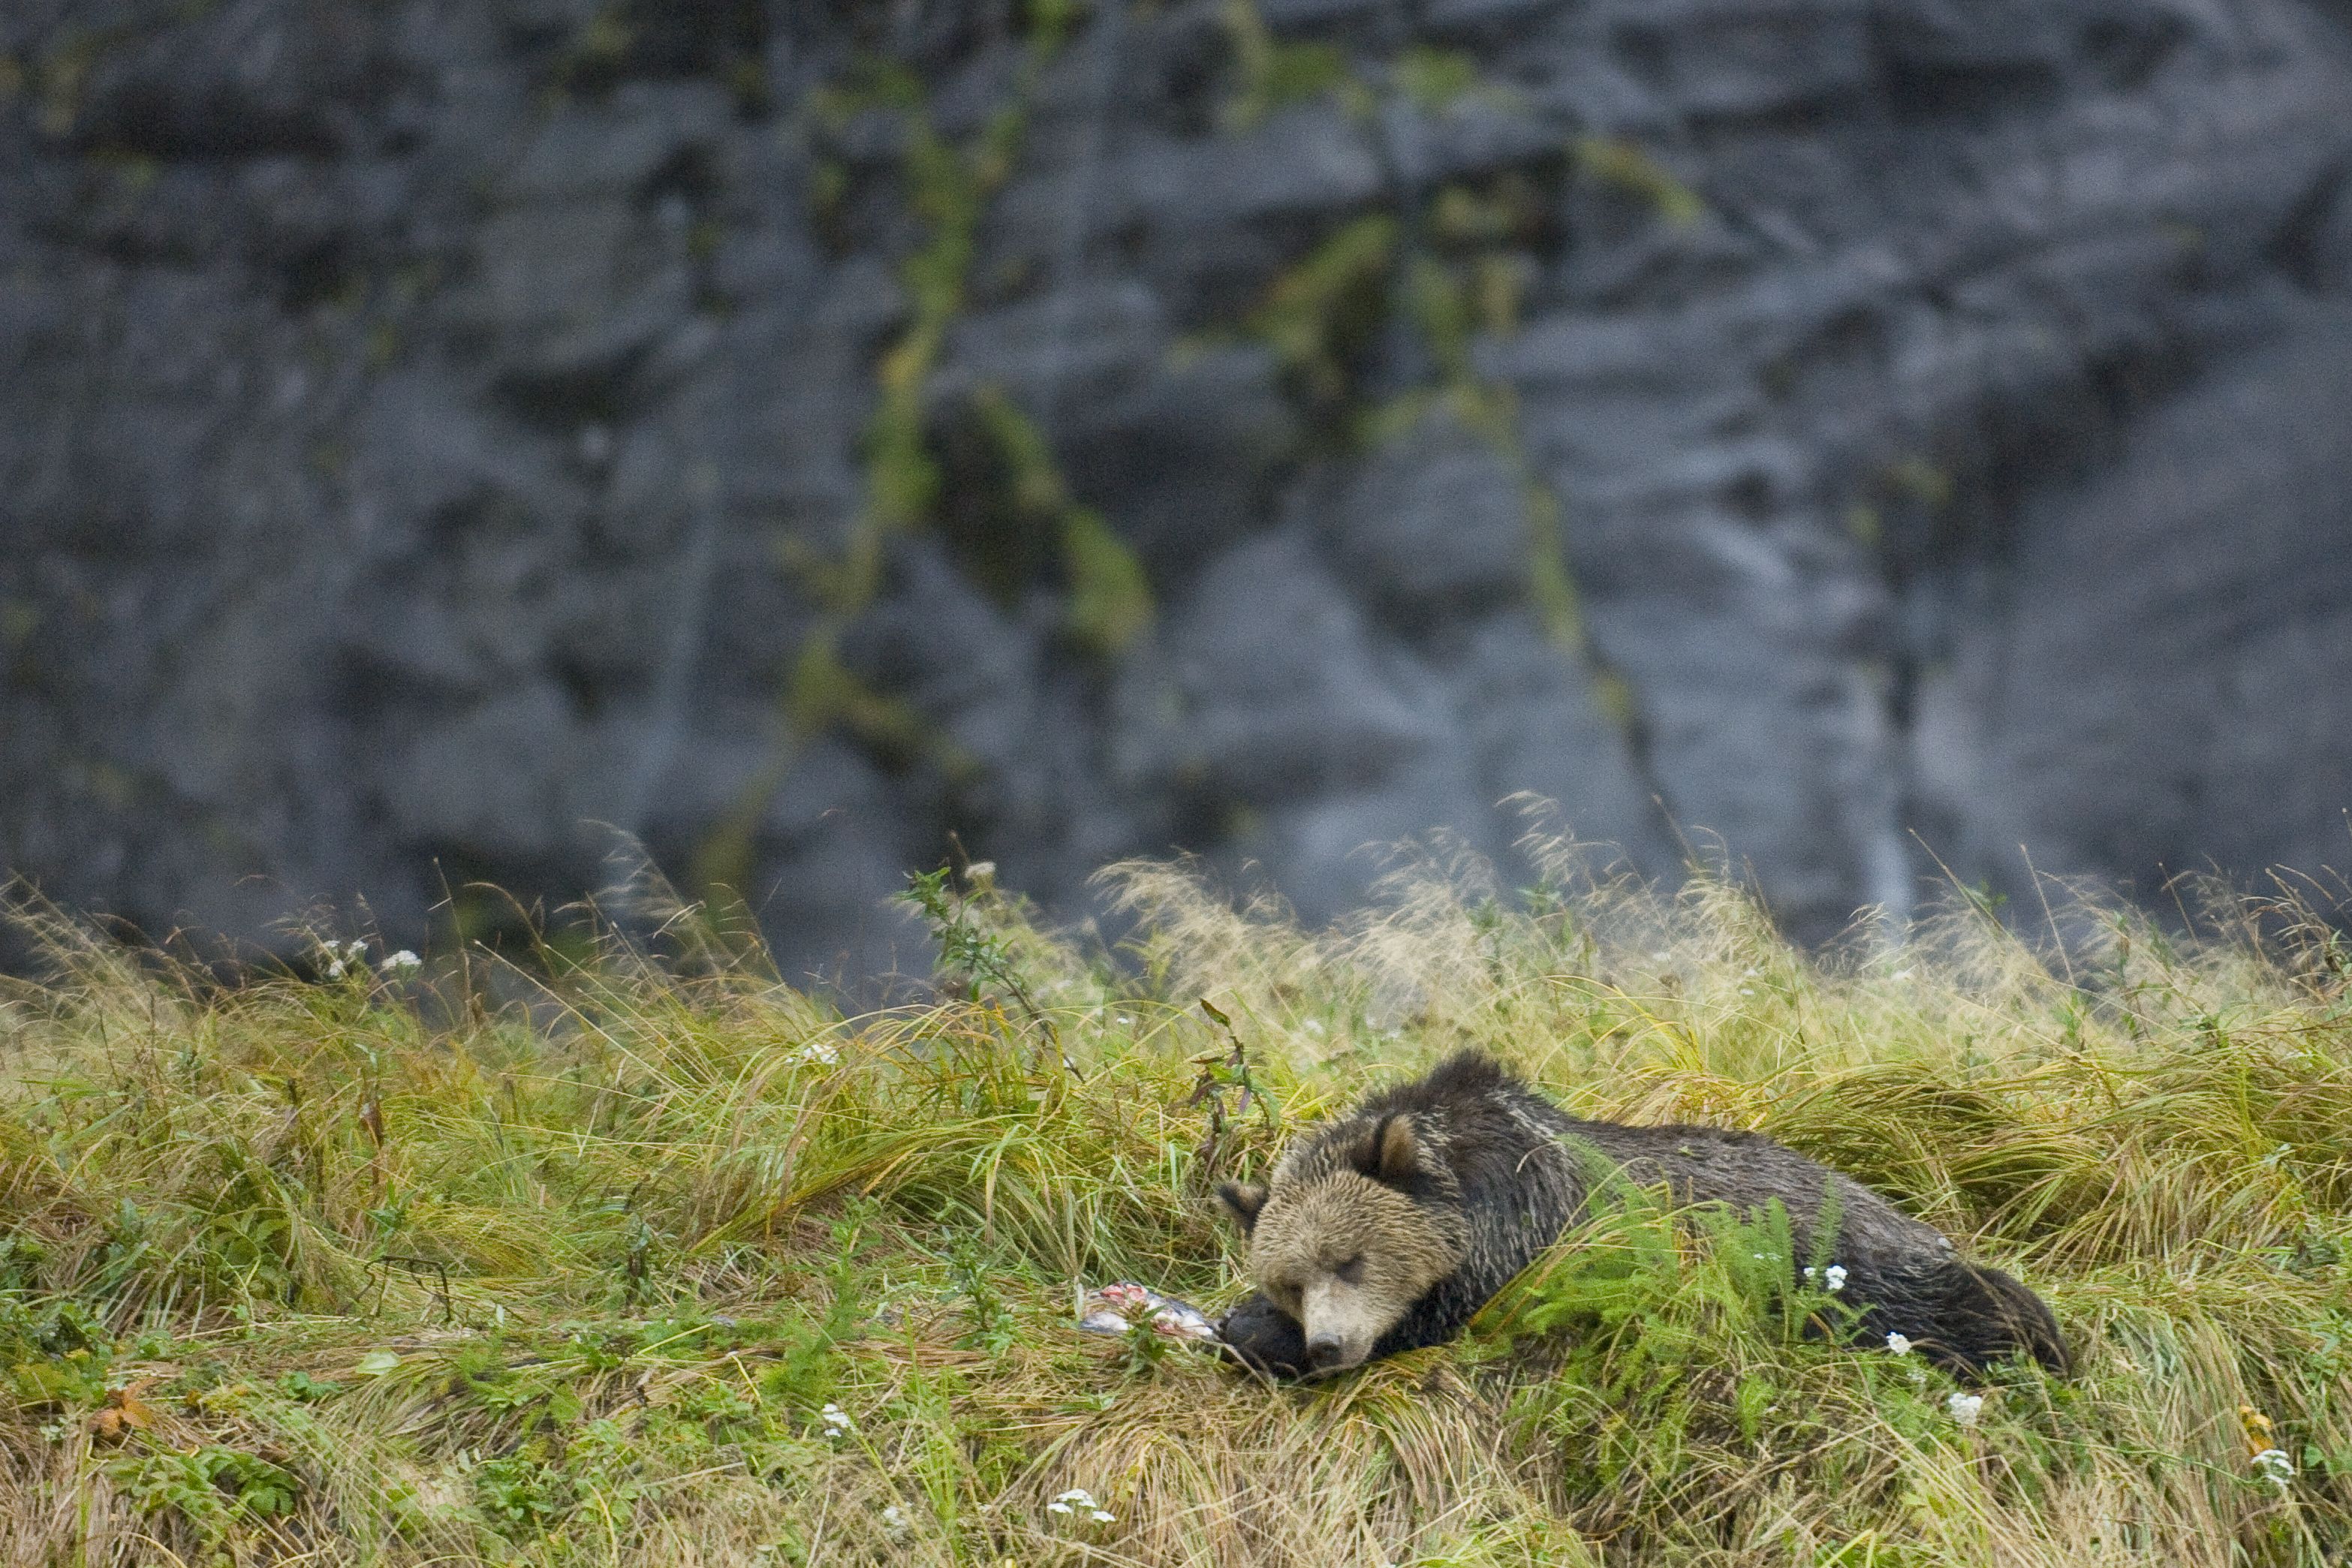 ID: brown bear naps on grassy meadow